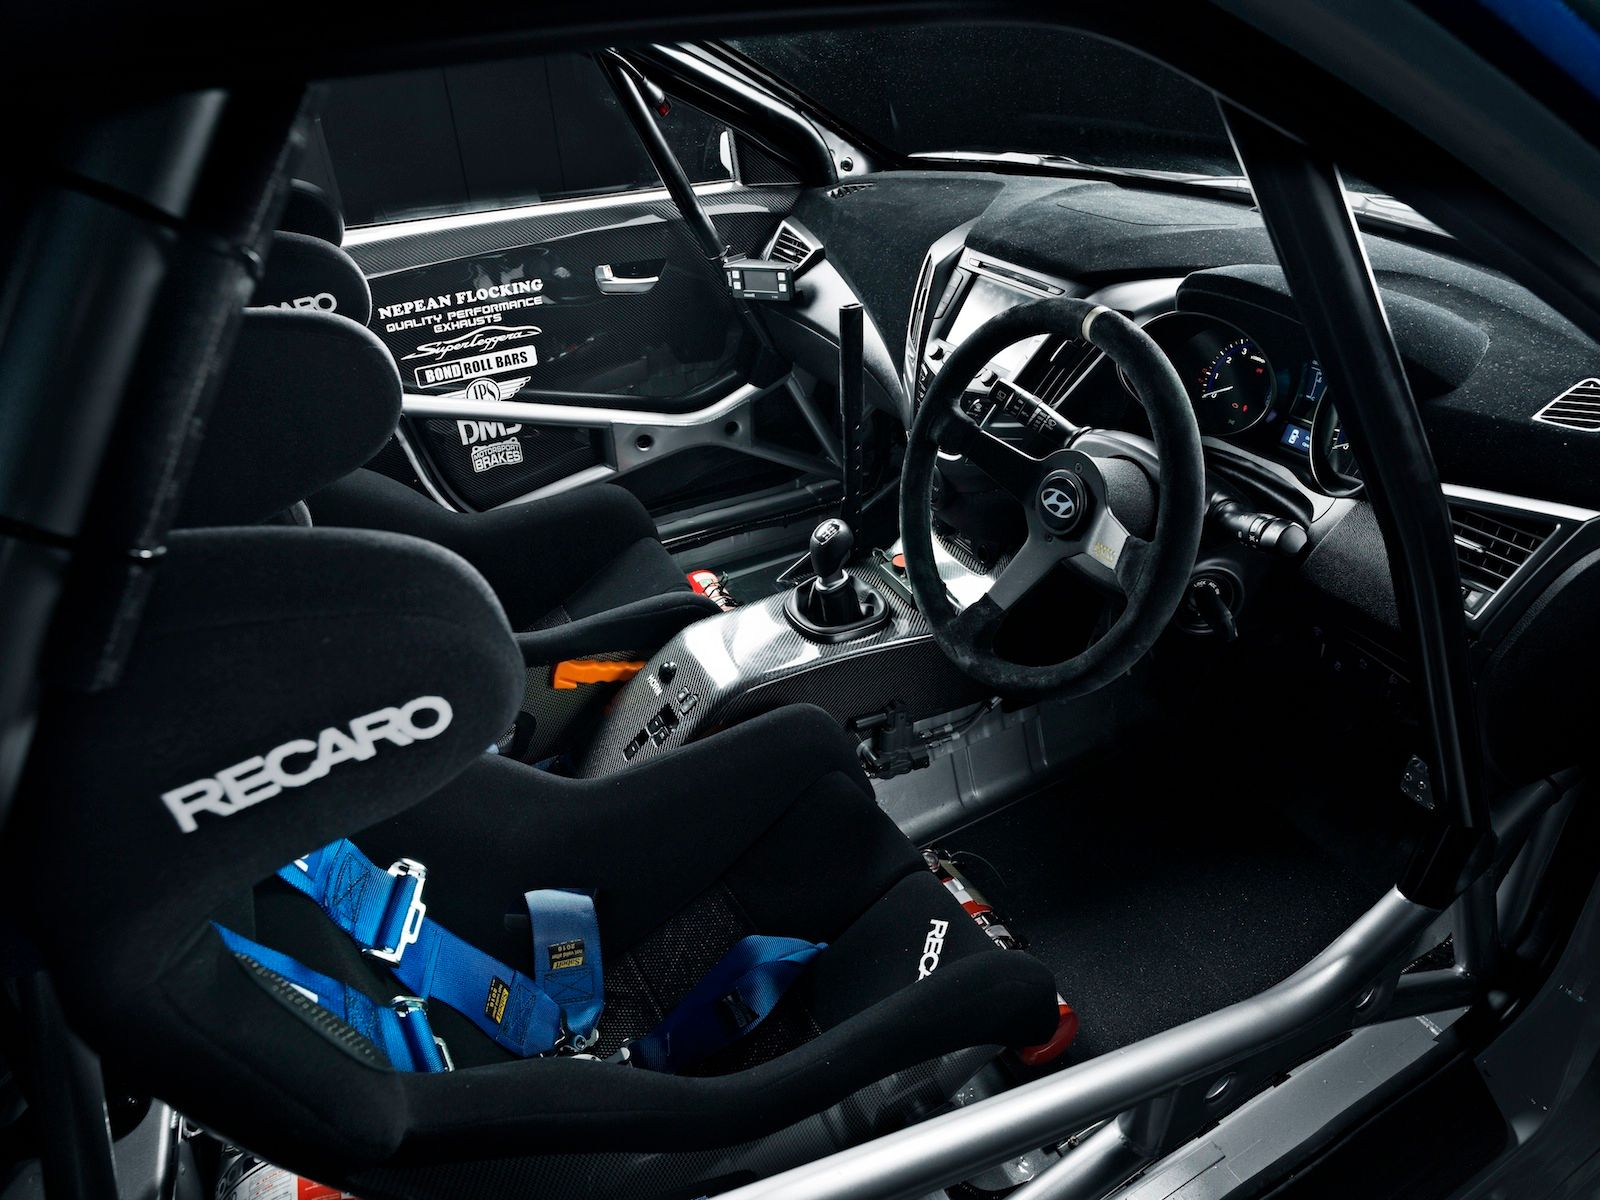 2013 Hyundai Veloster Turbo Race Concept